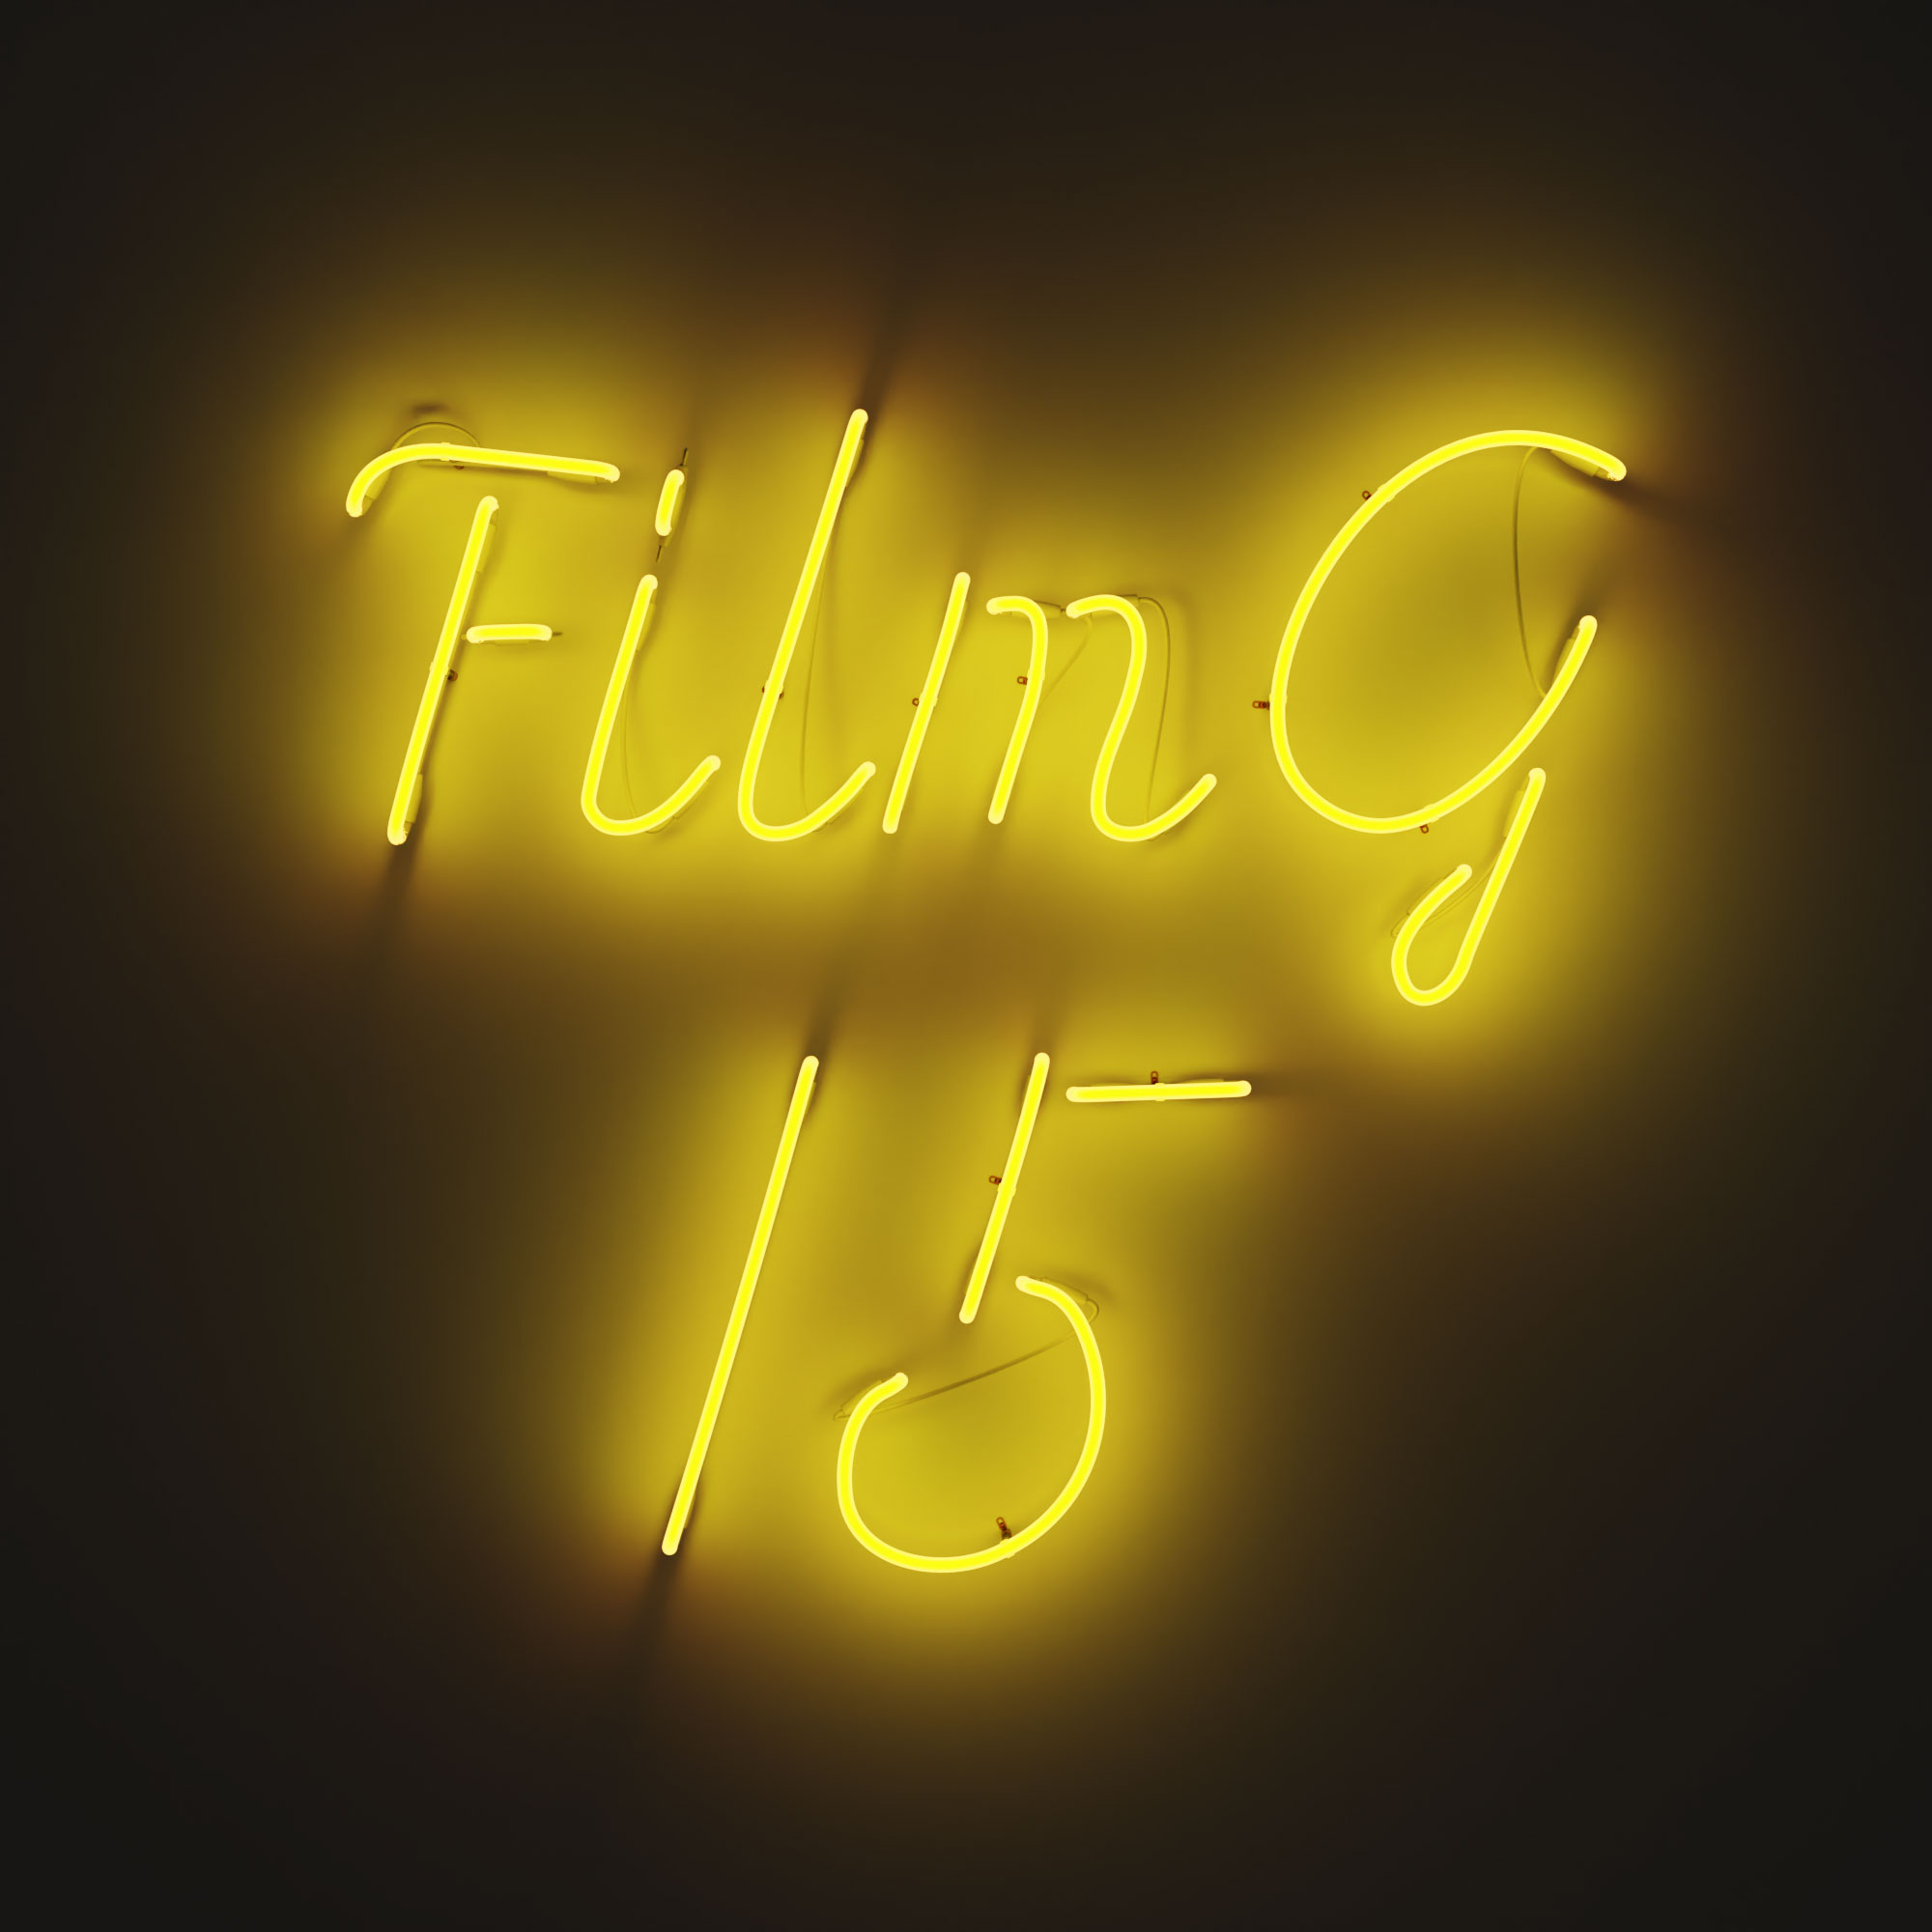 FilmG celebrates its 15 year